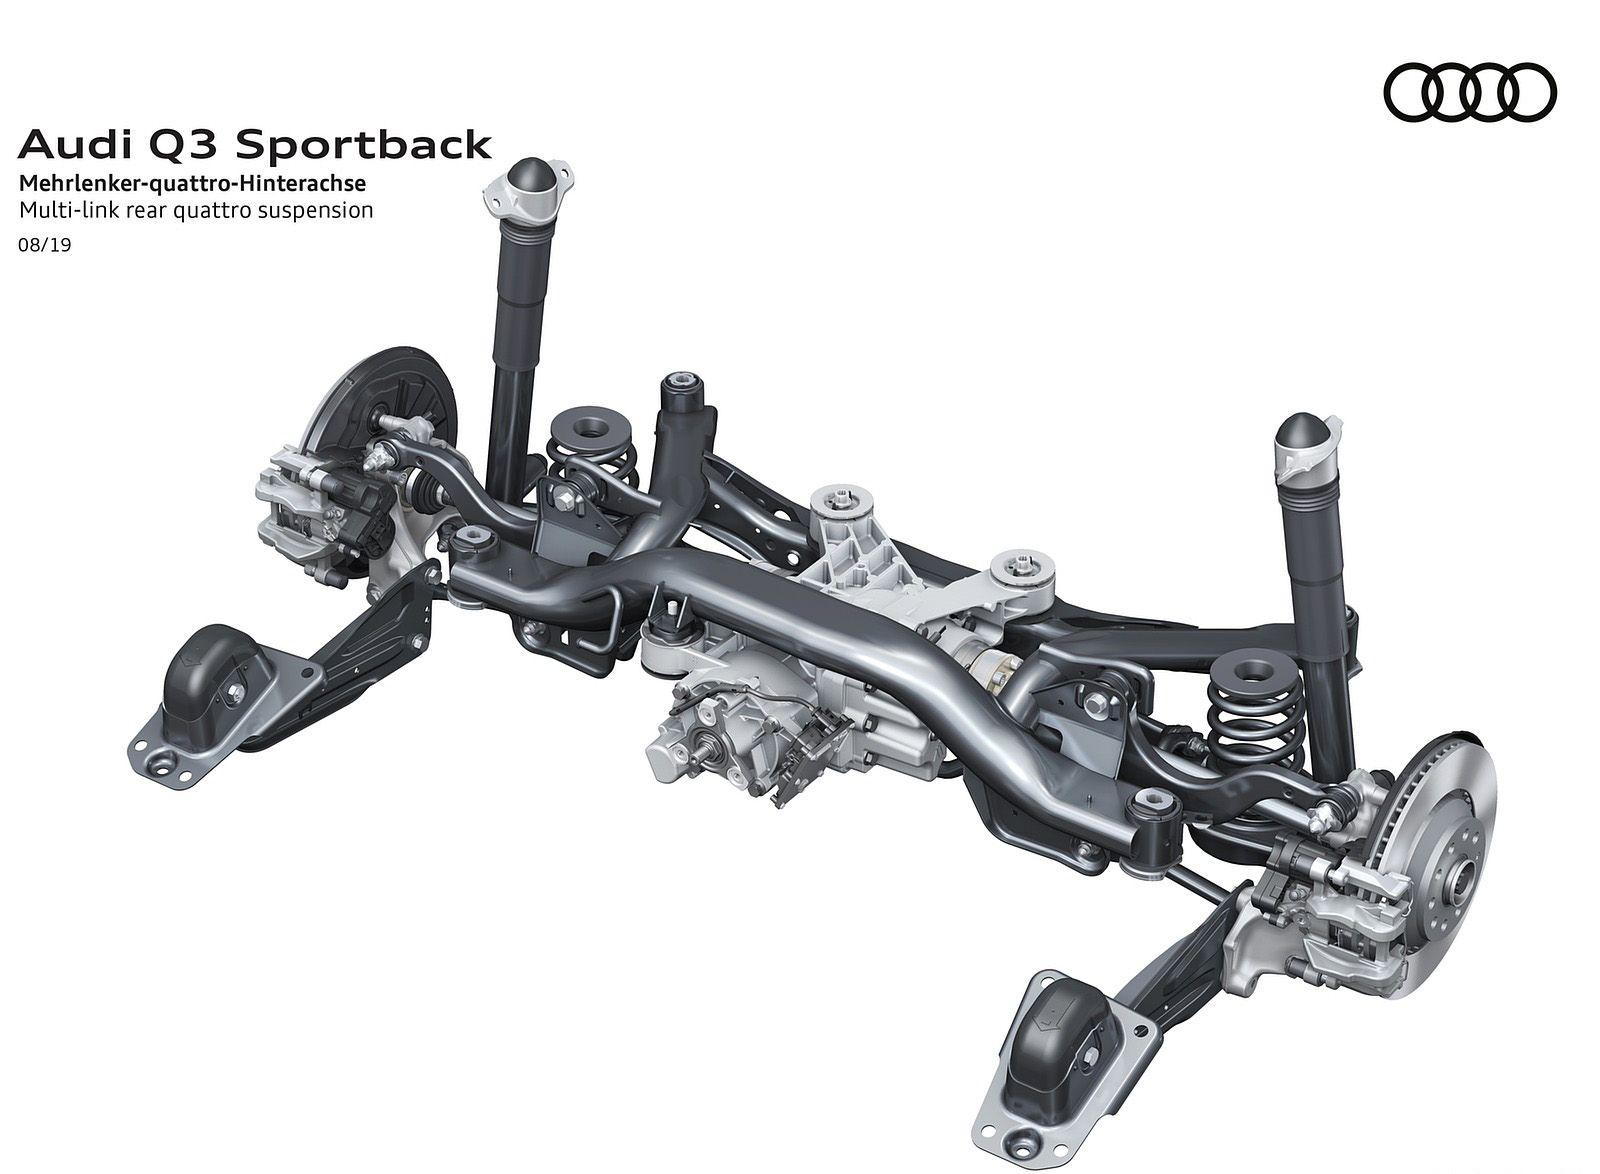 2020 Audi Q3 Sportback Multi-link rear quattro suspension Wallpapers #276 of 285